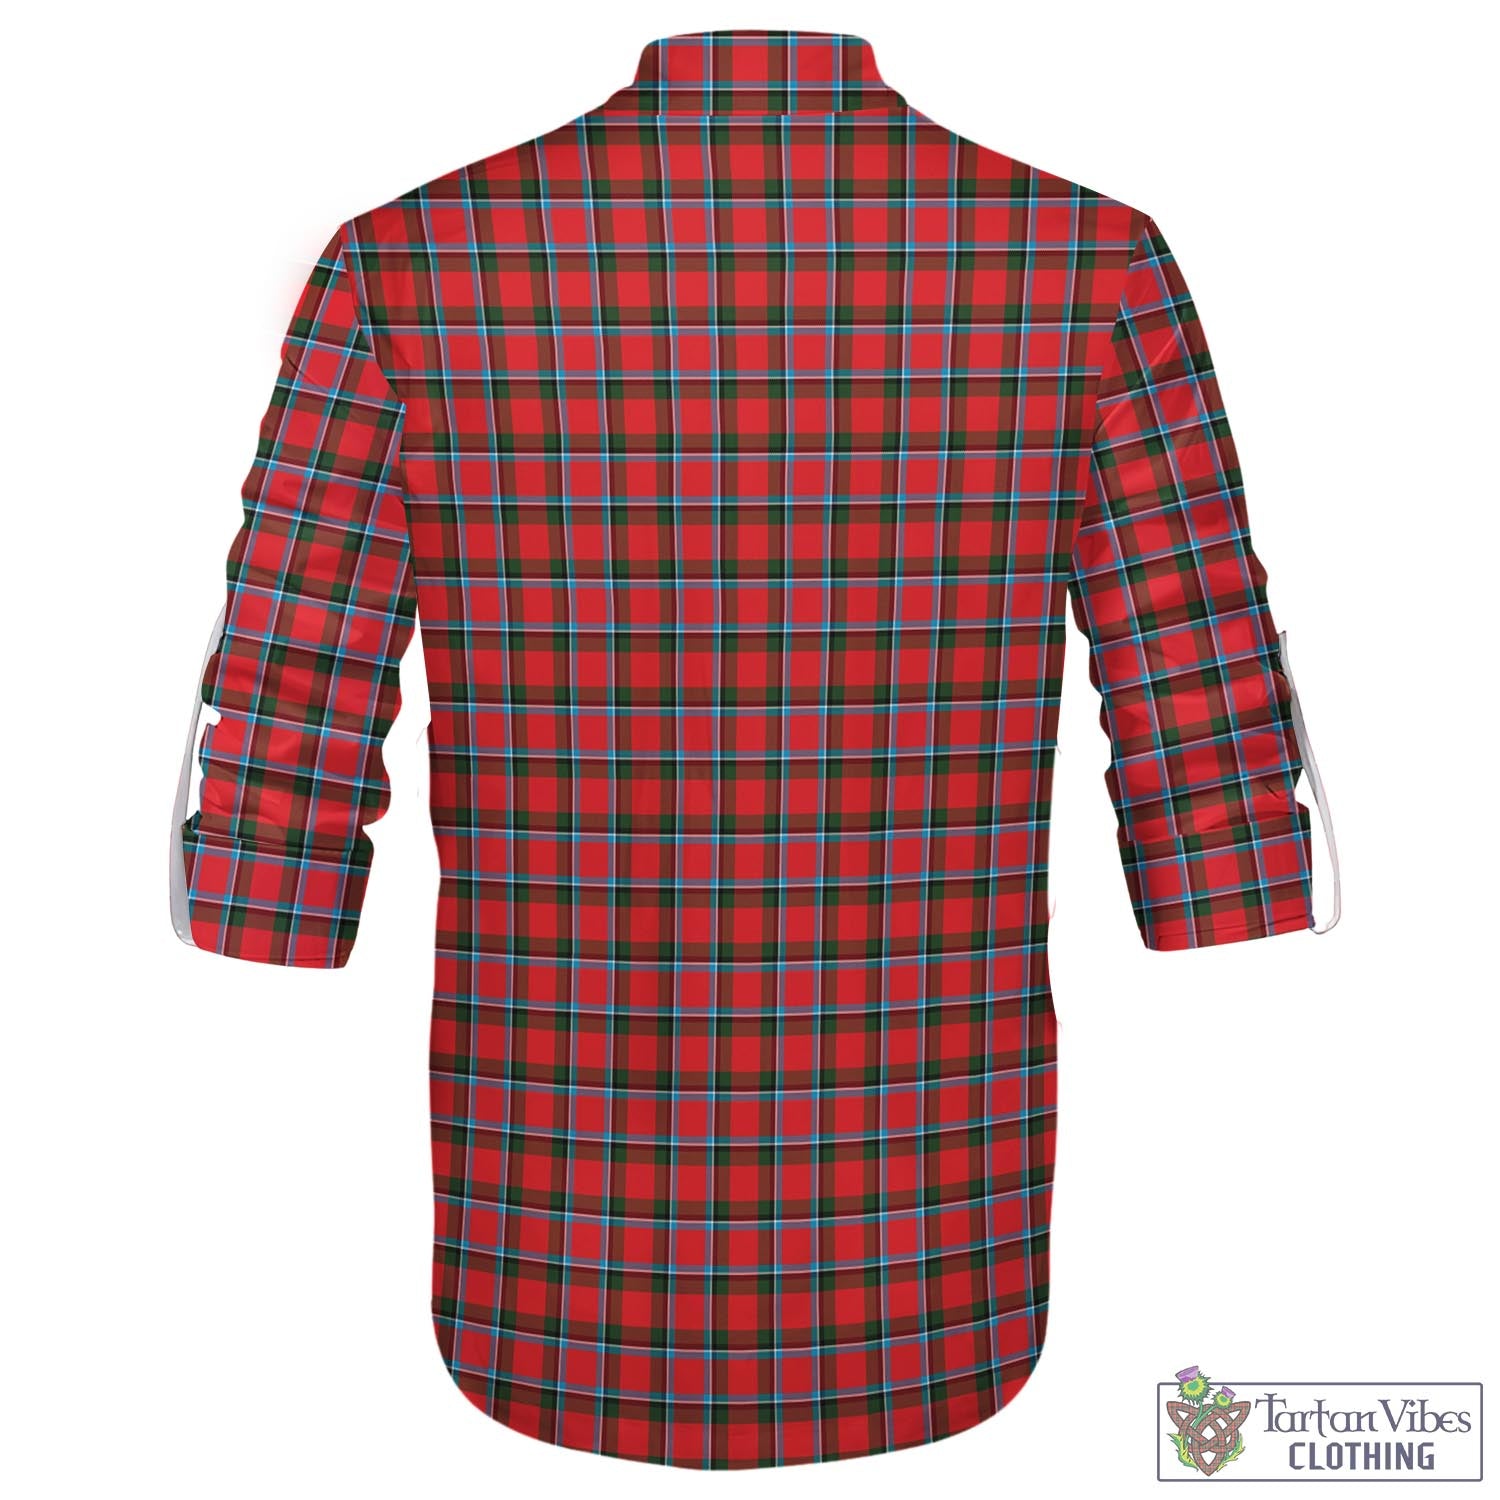 Tartan Vibes Clothing Sinclair Modern Tartan Men's Scottish Traditional Jacobite Ghillie Kilt Shirt with Family Crest